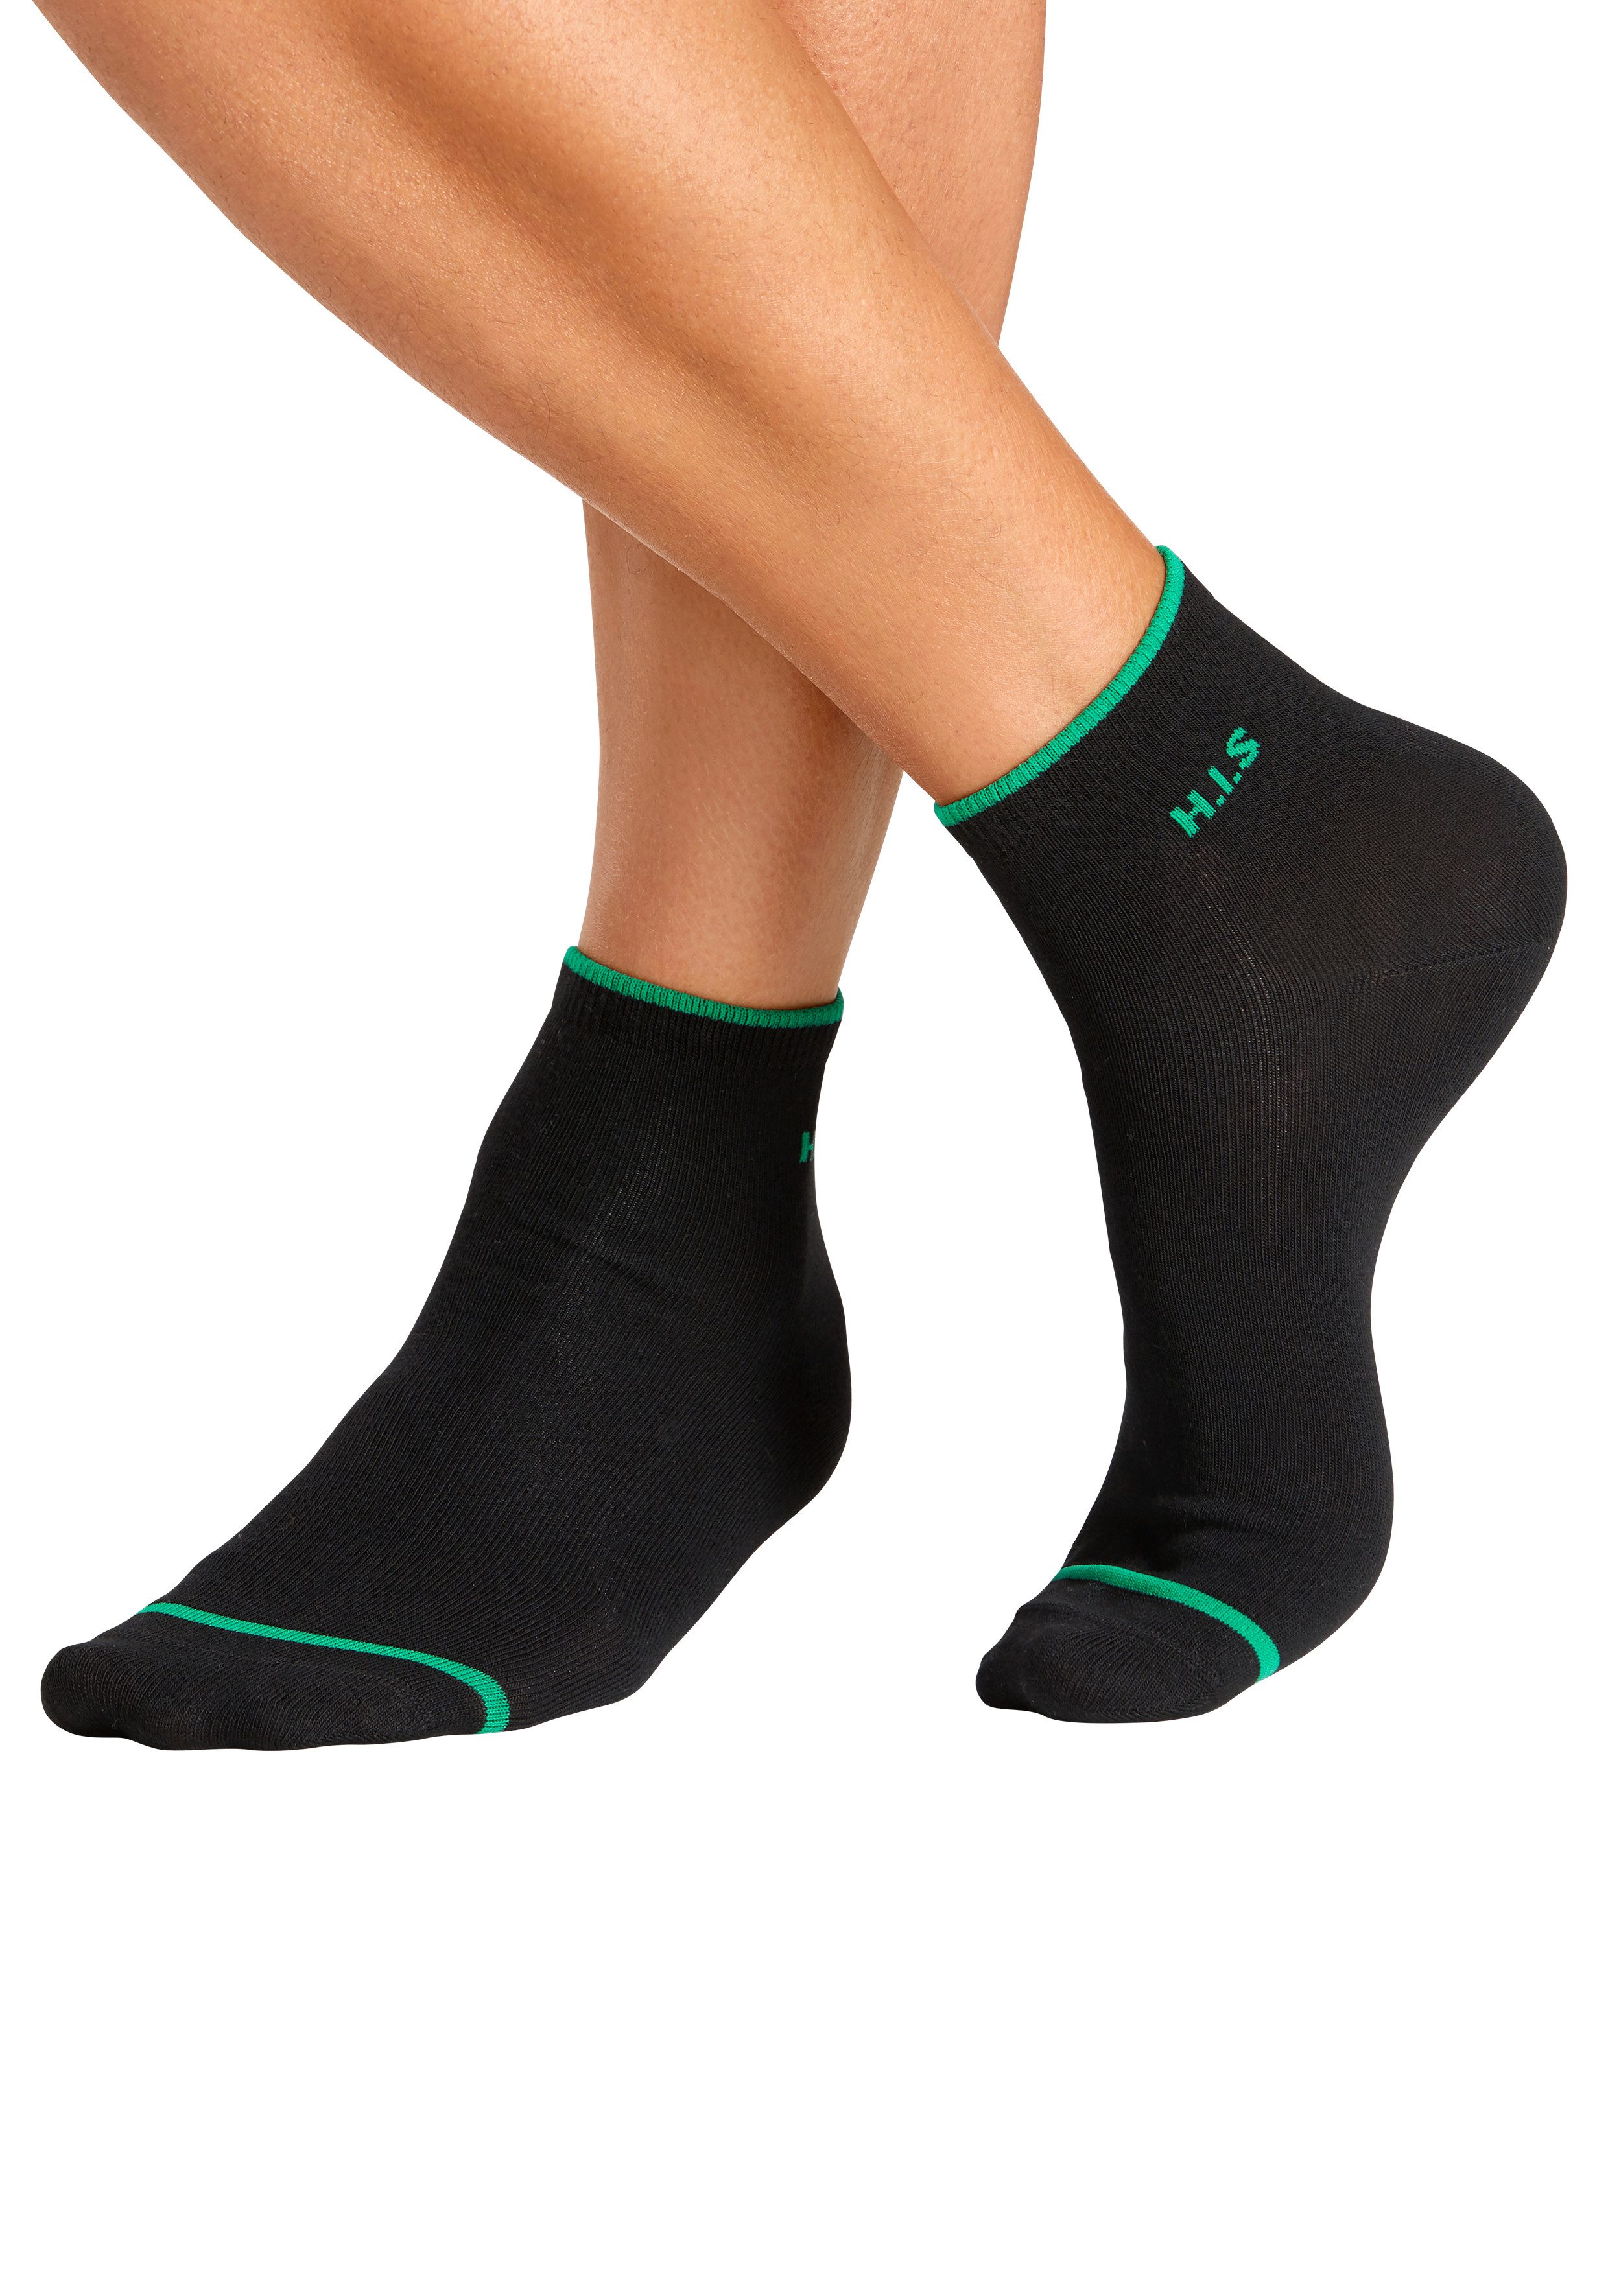 H.I.S Korte sokken met gekleurde boord (set 7 paar)